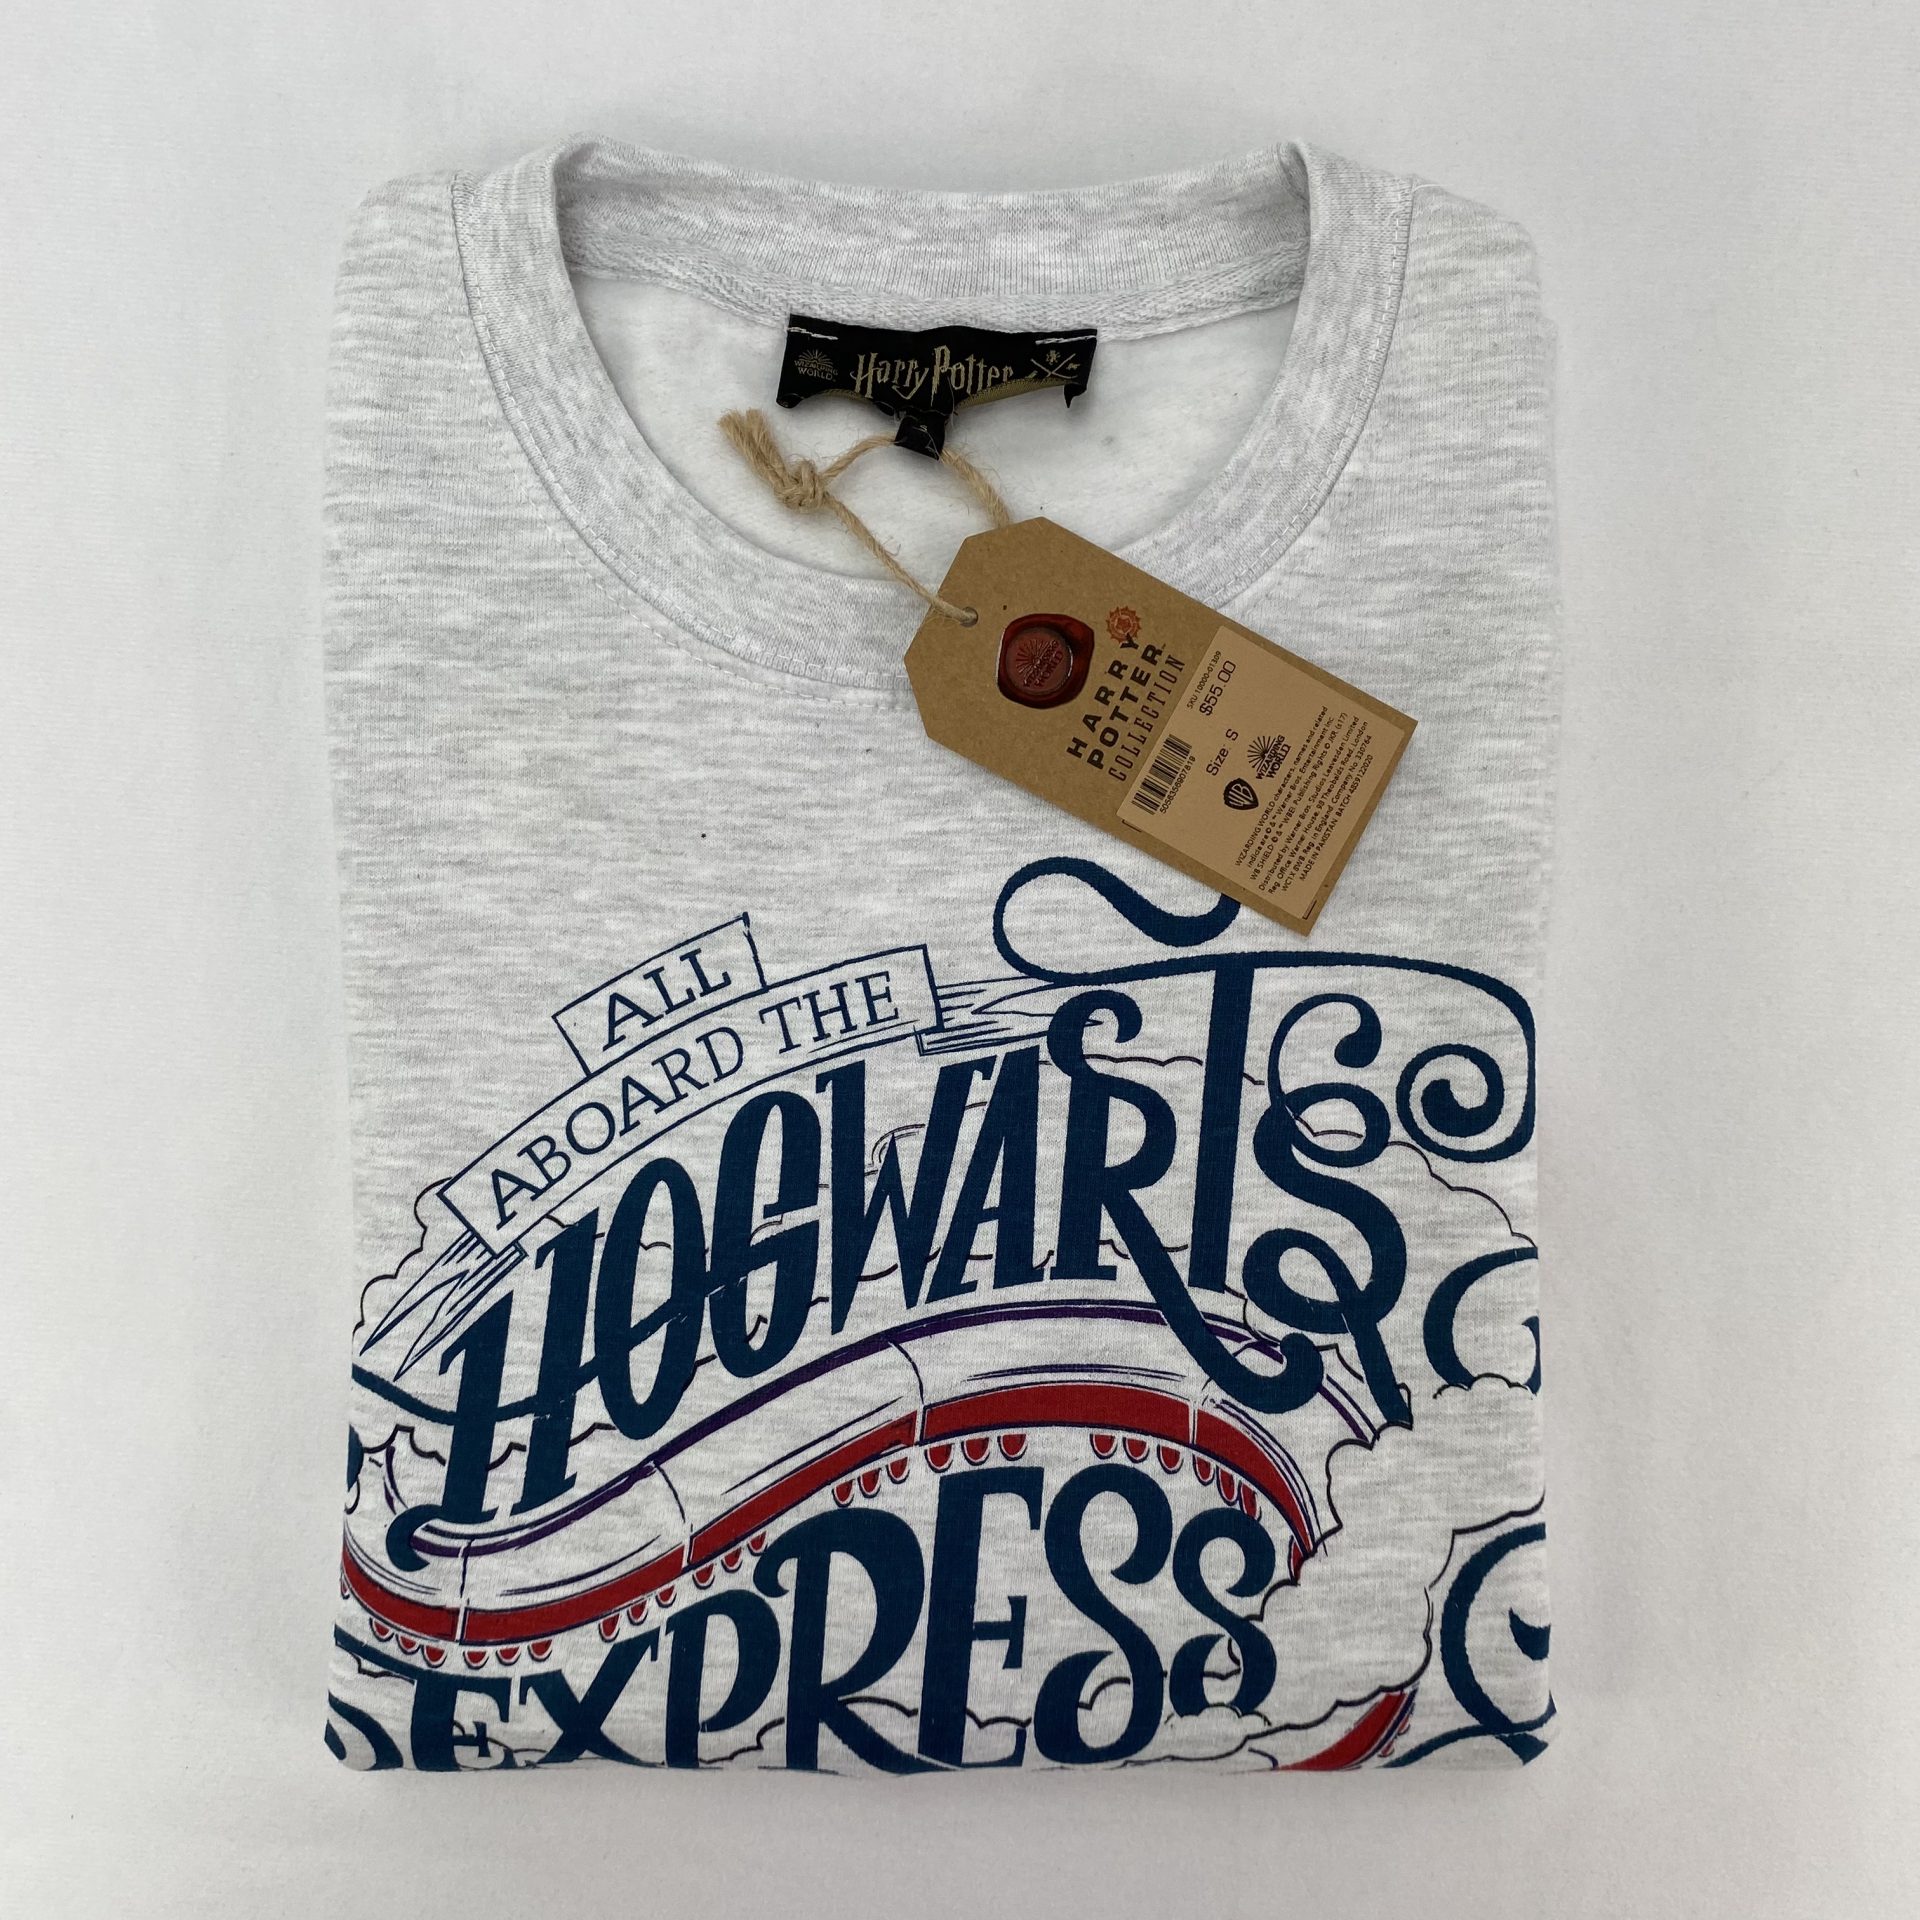 Hogwarts printed sweatshirt